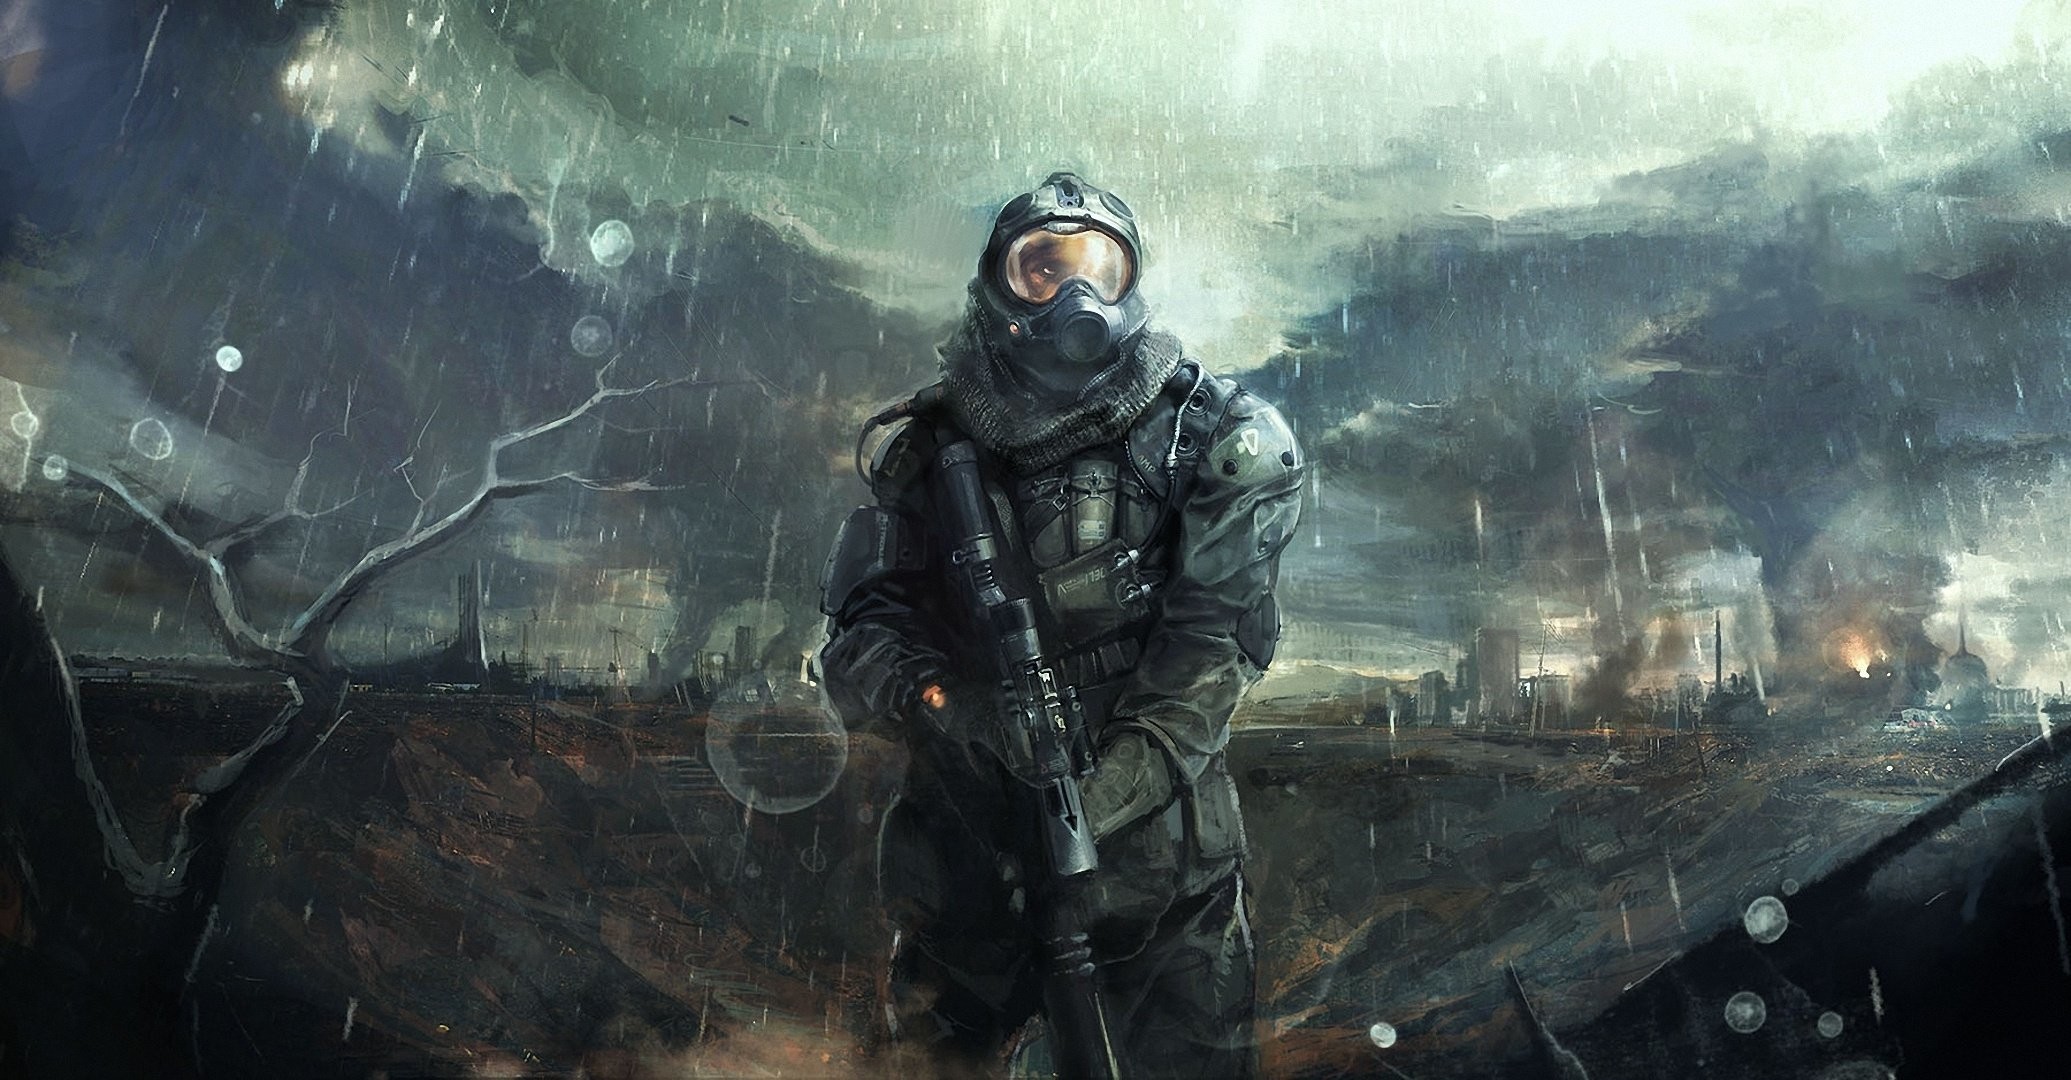 2071x1080 Man helmet armor art clouds weapon dark rain soldier apocalyptic wallpaper  |  | 336013 |